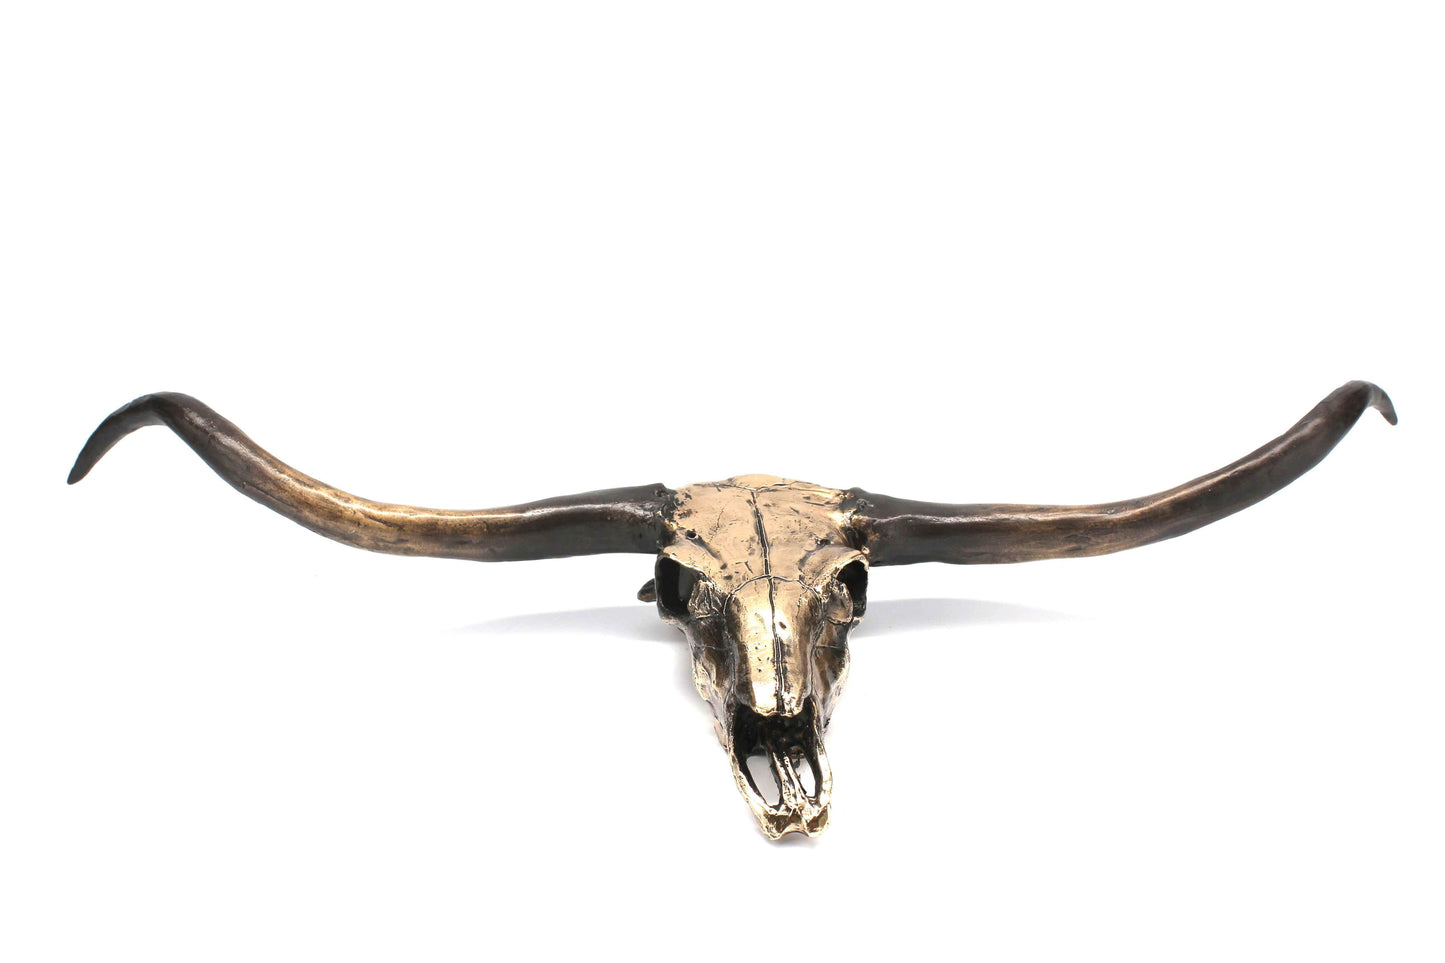 Jim Eppler-Longhorn Skull-Sorrel Sky Gallery-Sculpture